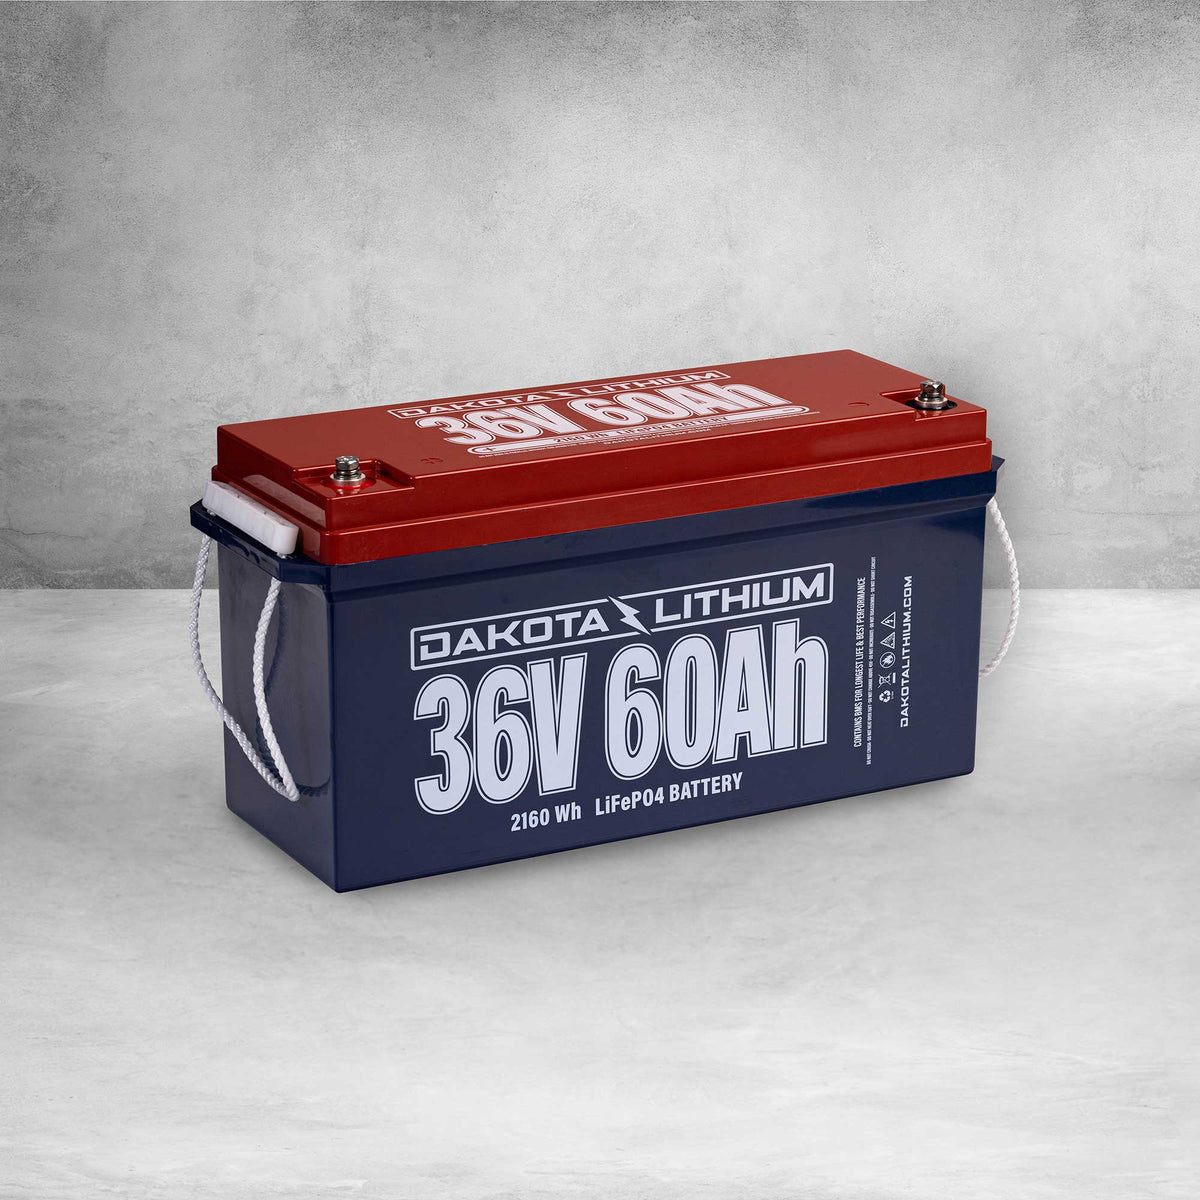 Dakota Lithium 36V 60ah Deep Cycle LifeP04 Battery